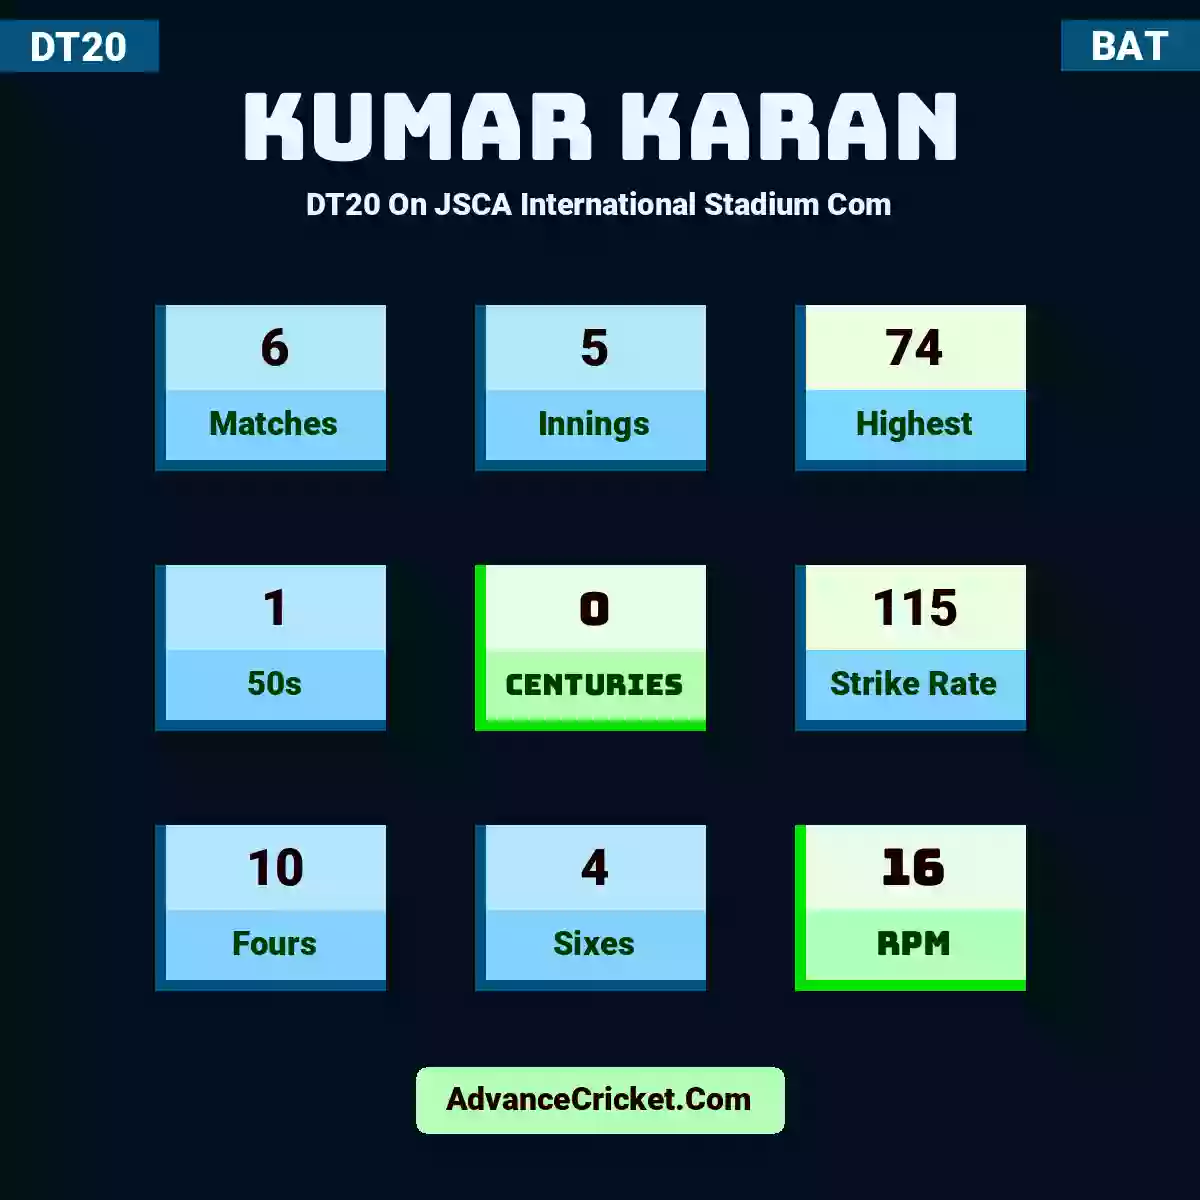 Kumar Karan DT20  On JSCA International Stadium Com, Kumar Karan played 6 matches, scored 74 runs as highest, 1 half-centuries, and 0 centuries, with a strike rate of 115. K.Karan hit 10 fours and 4 sixes, with an RPM of 16.